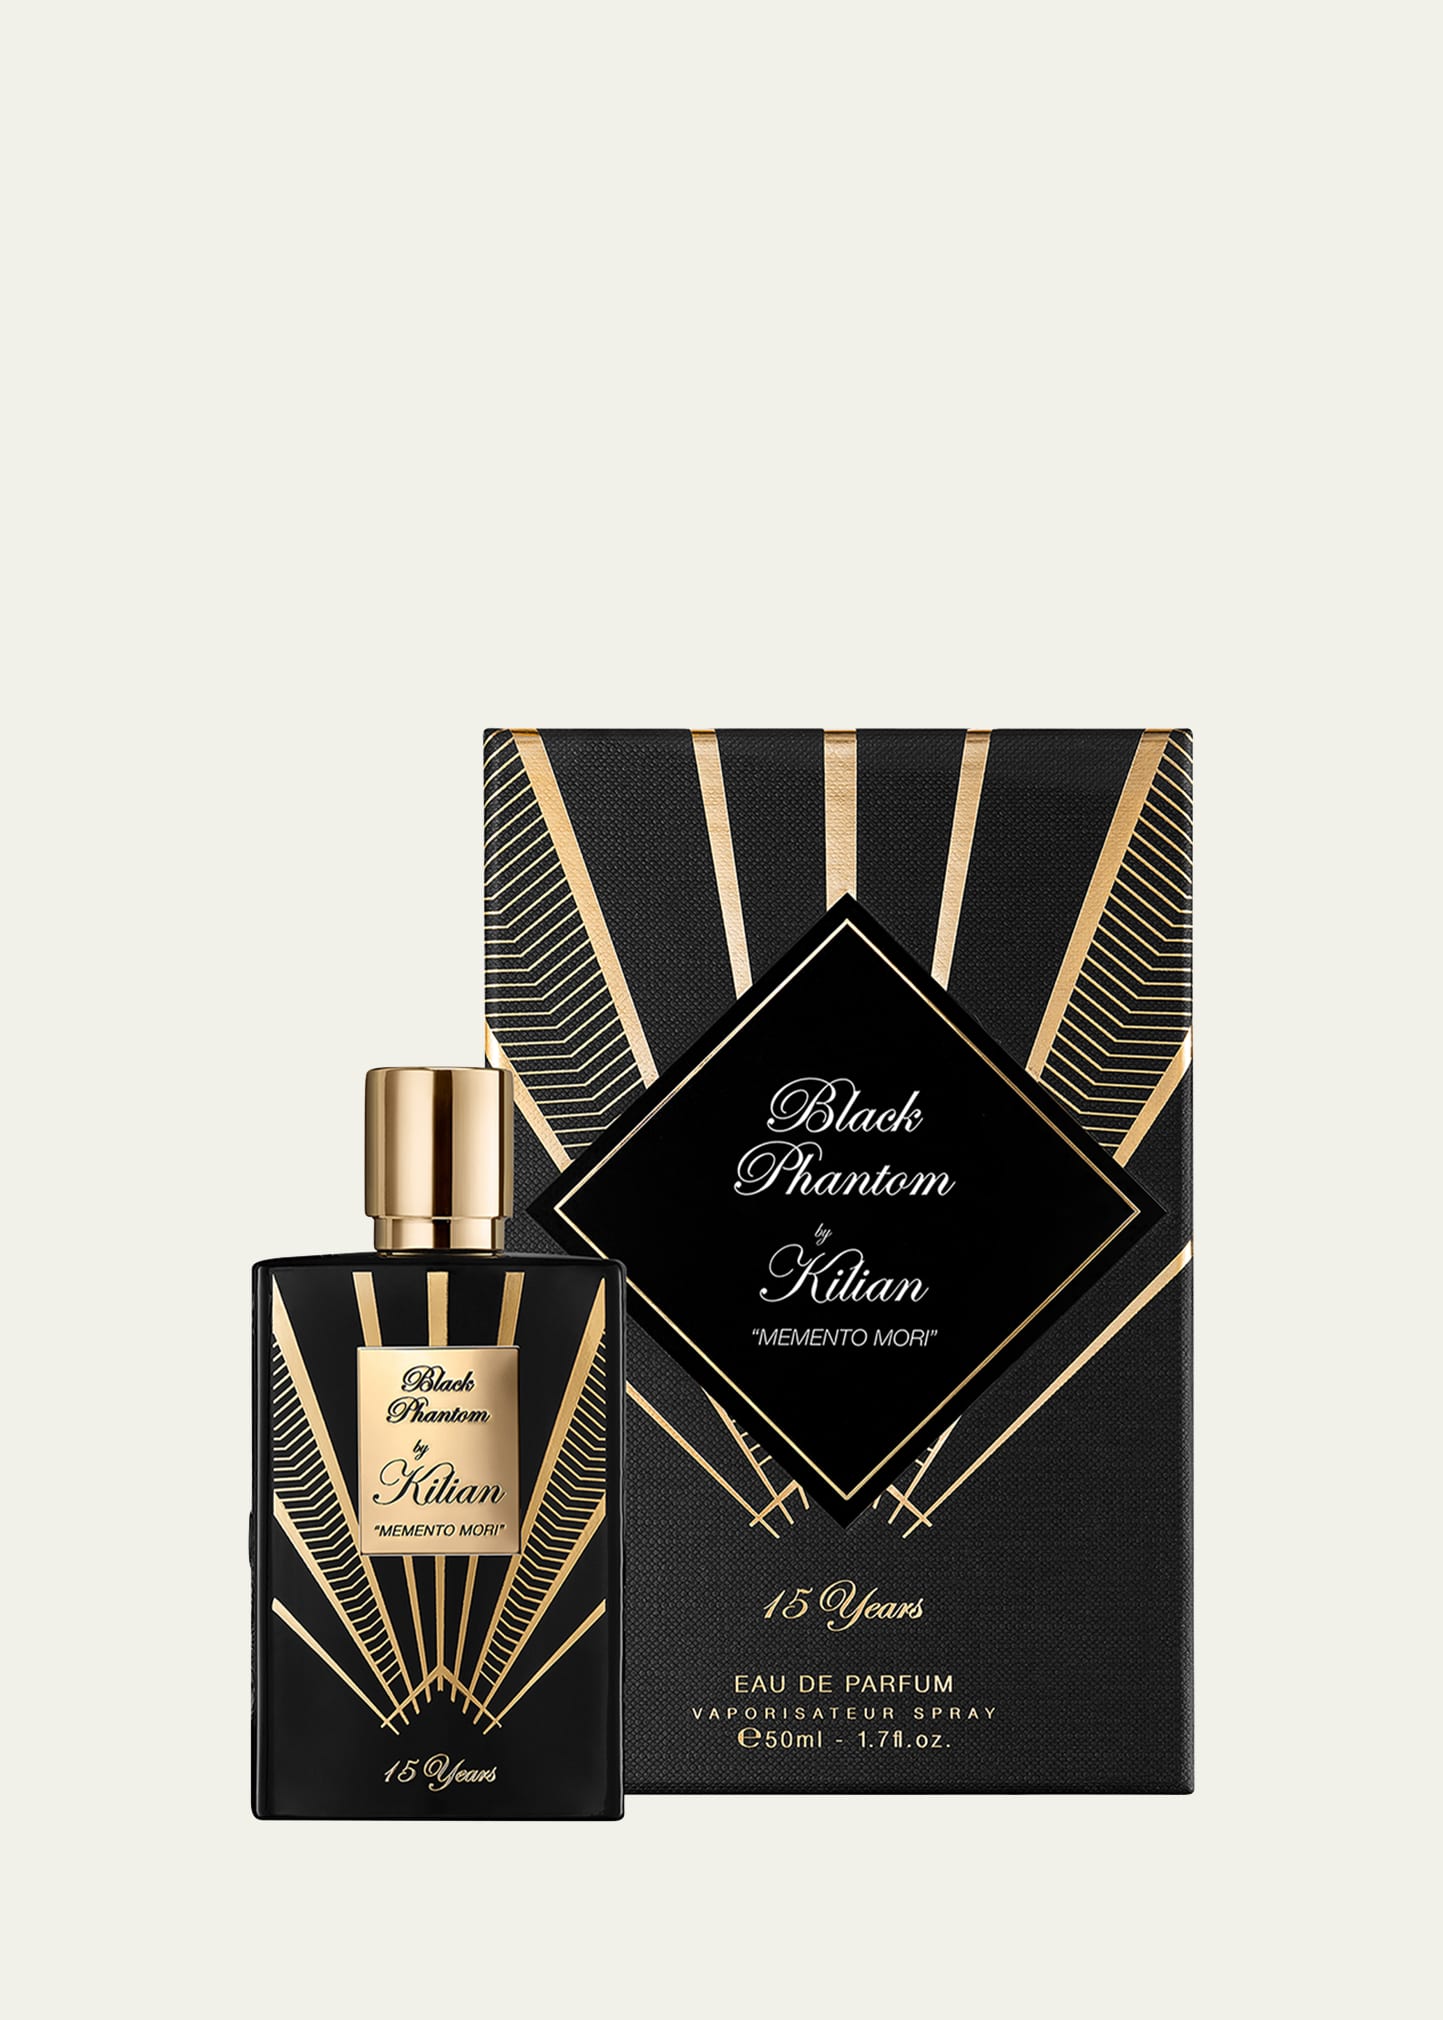 Black Phantom "Memento Mori" Eau de Parfum, 1.7 oz. - Limited 15-Year Anniversary Holiday Edition